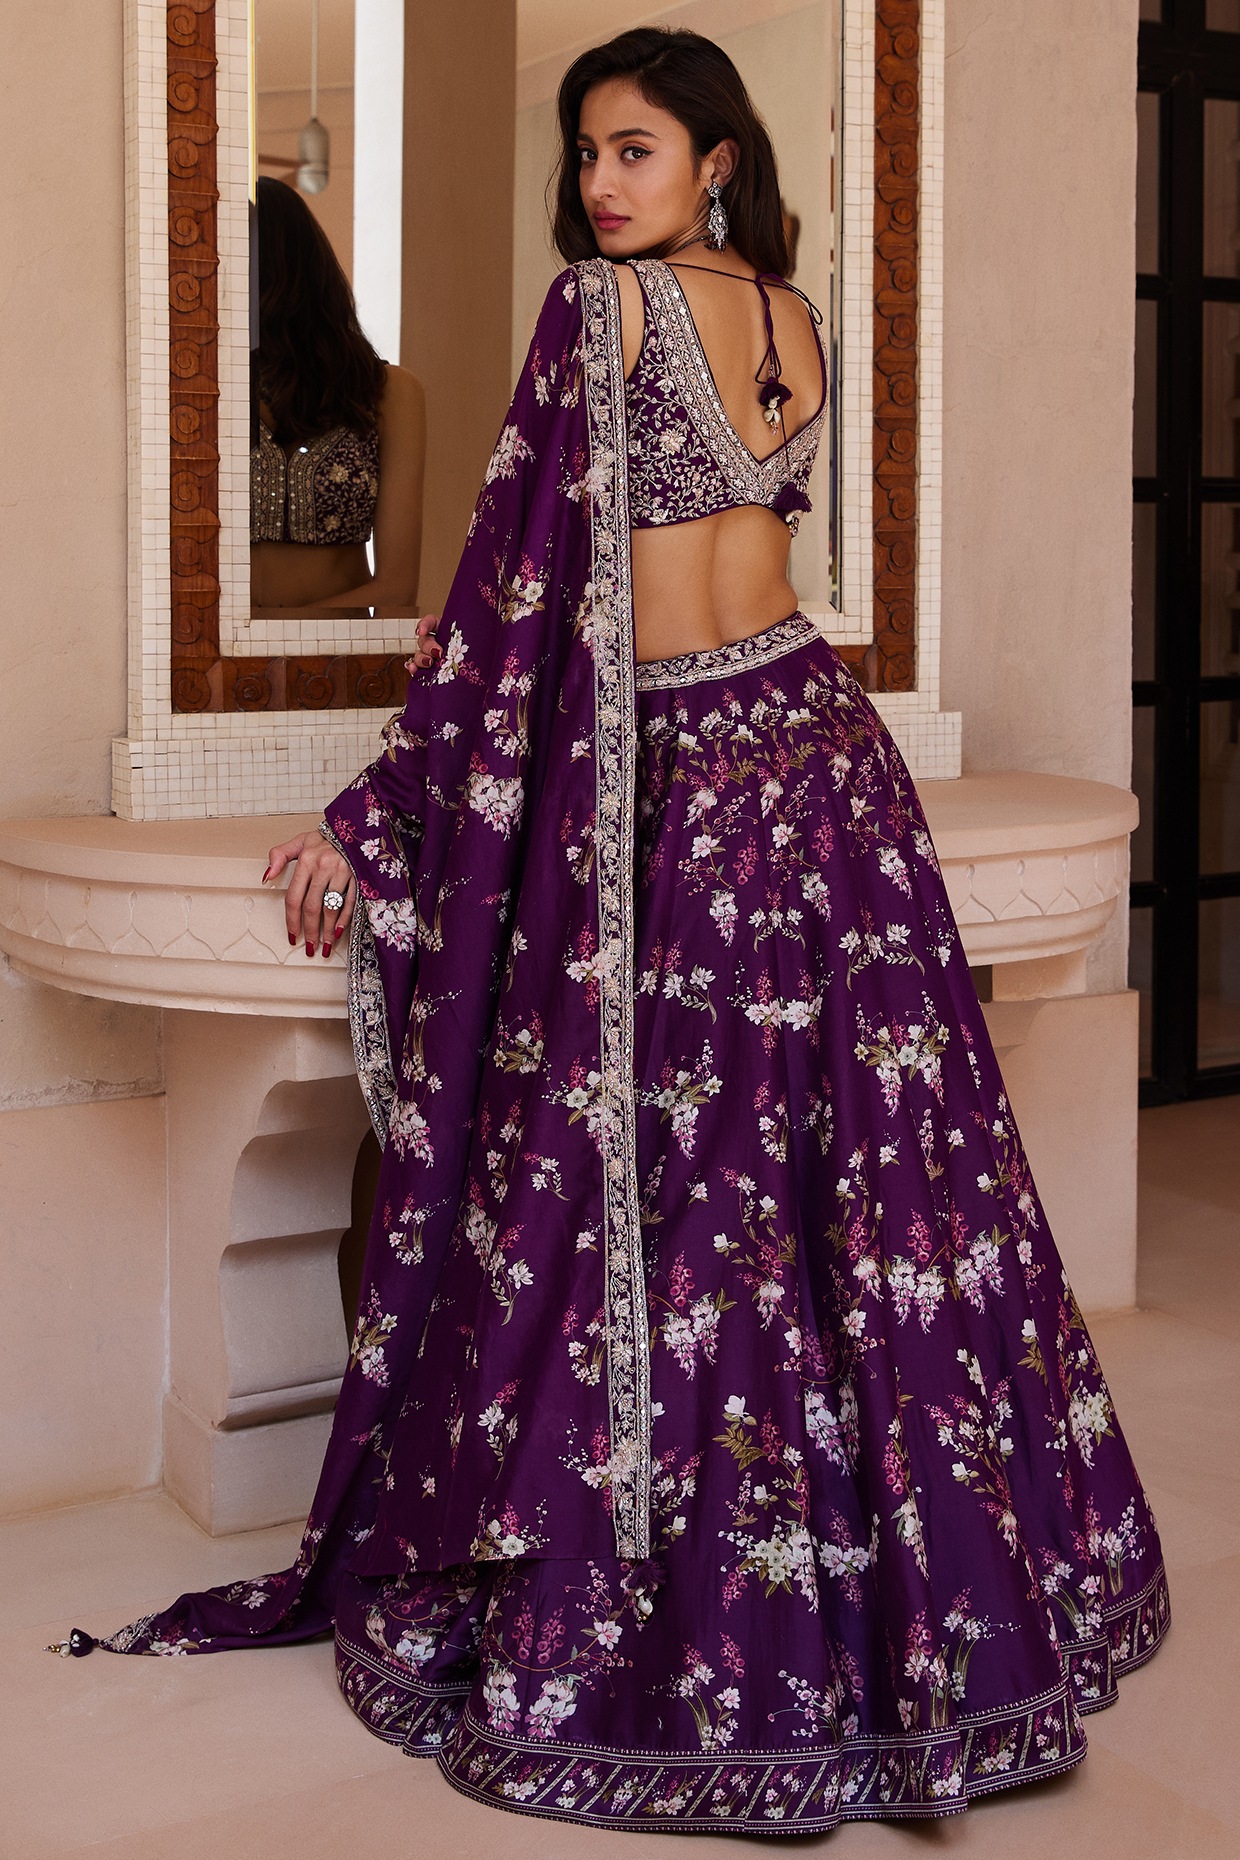 Silver Wedding Wear Dove Grey Purple Lehenga Set at Rs 3200 in Jaipur